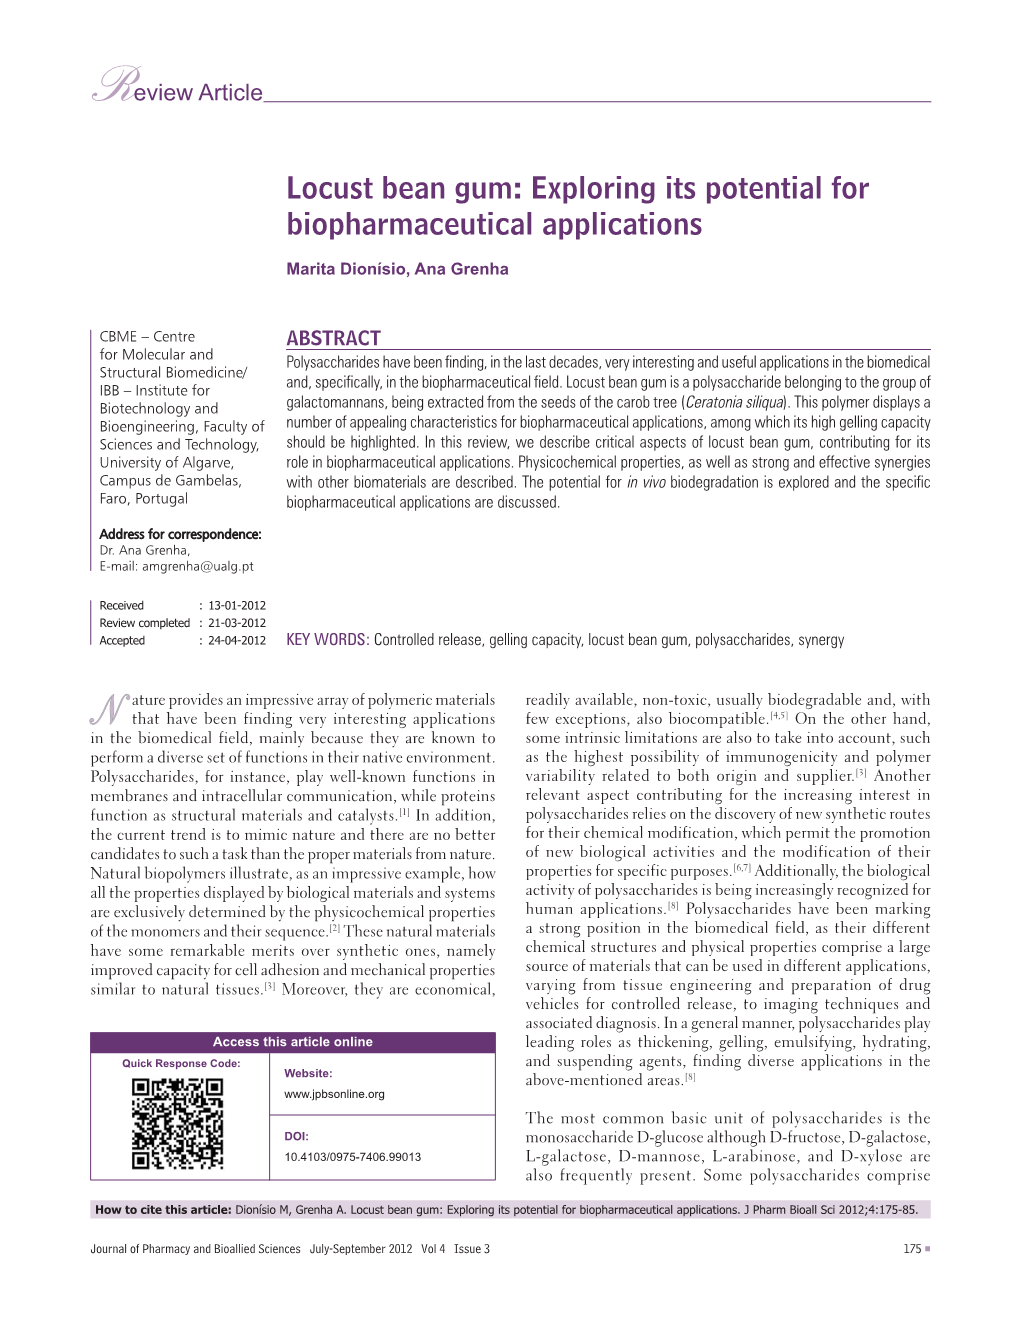 Locust Bean Gum: Exploring Its Potential for Biopharmaceutical Applications